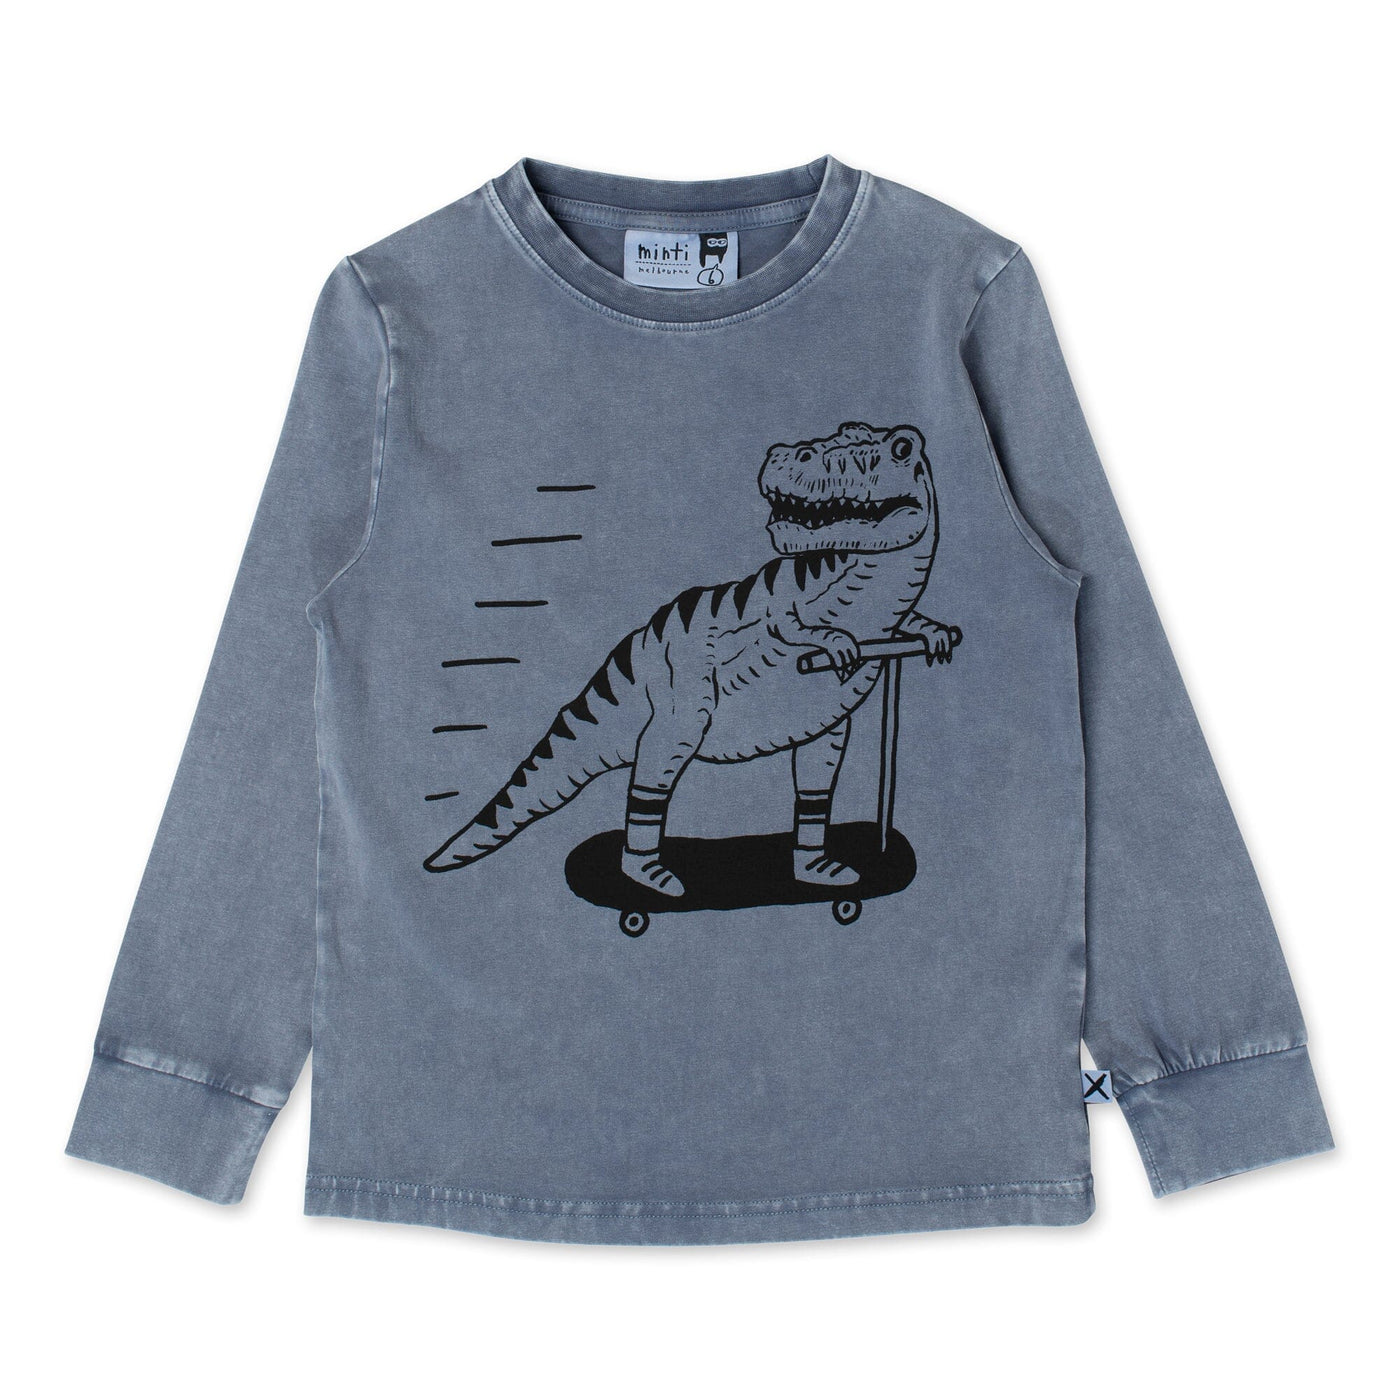 Scooting Dino Tee - Midnight Wash Long Sleeve T-Shirt Minti 